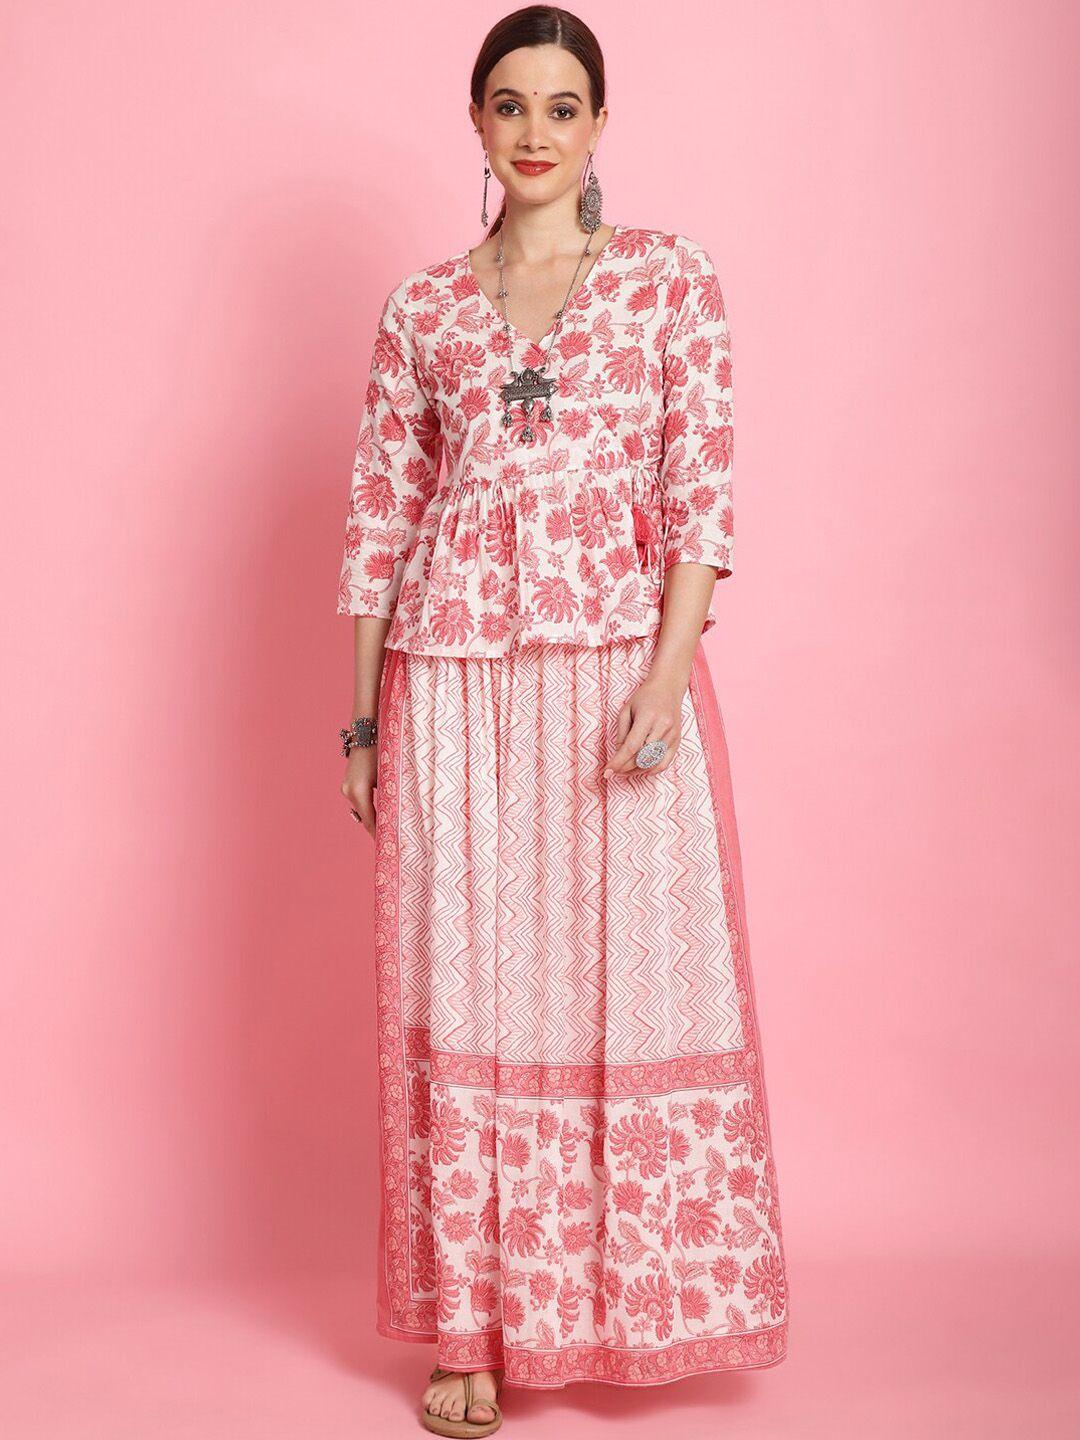 prakrti floral printed pure cotton top & skirt